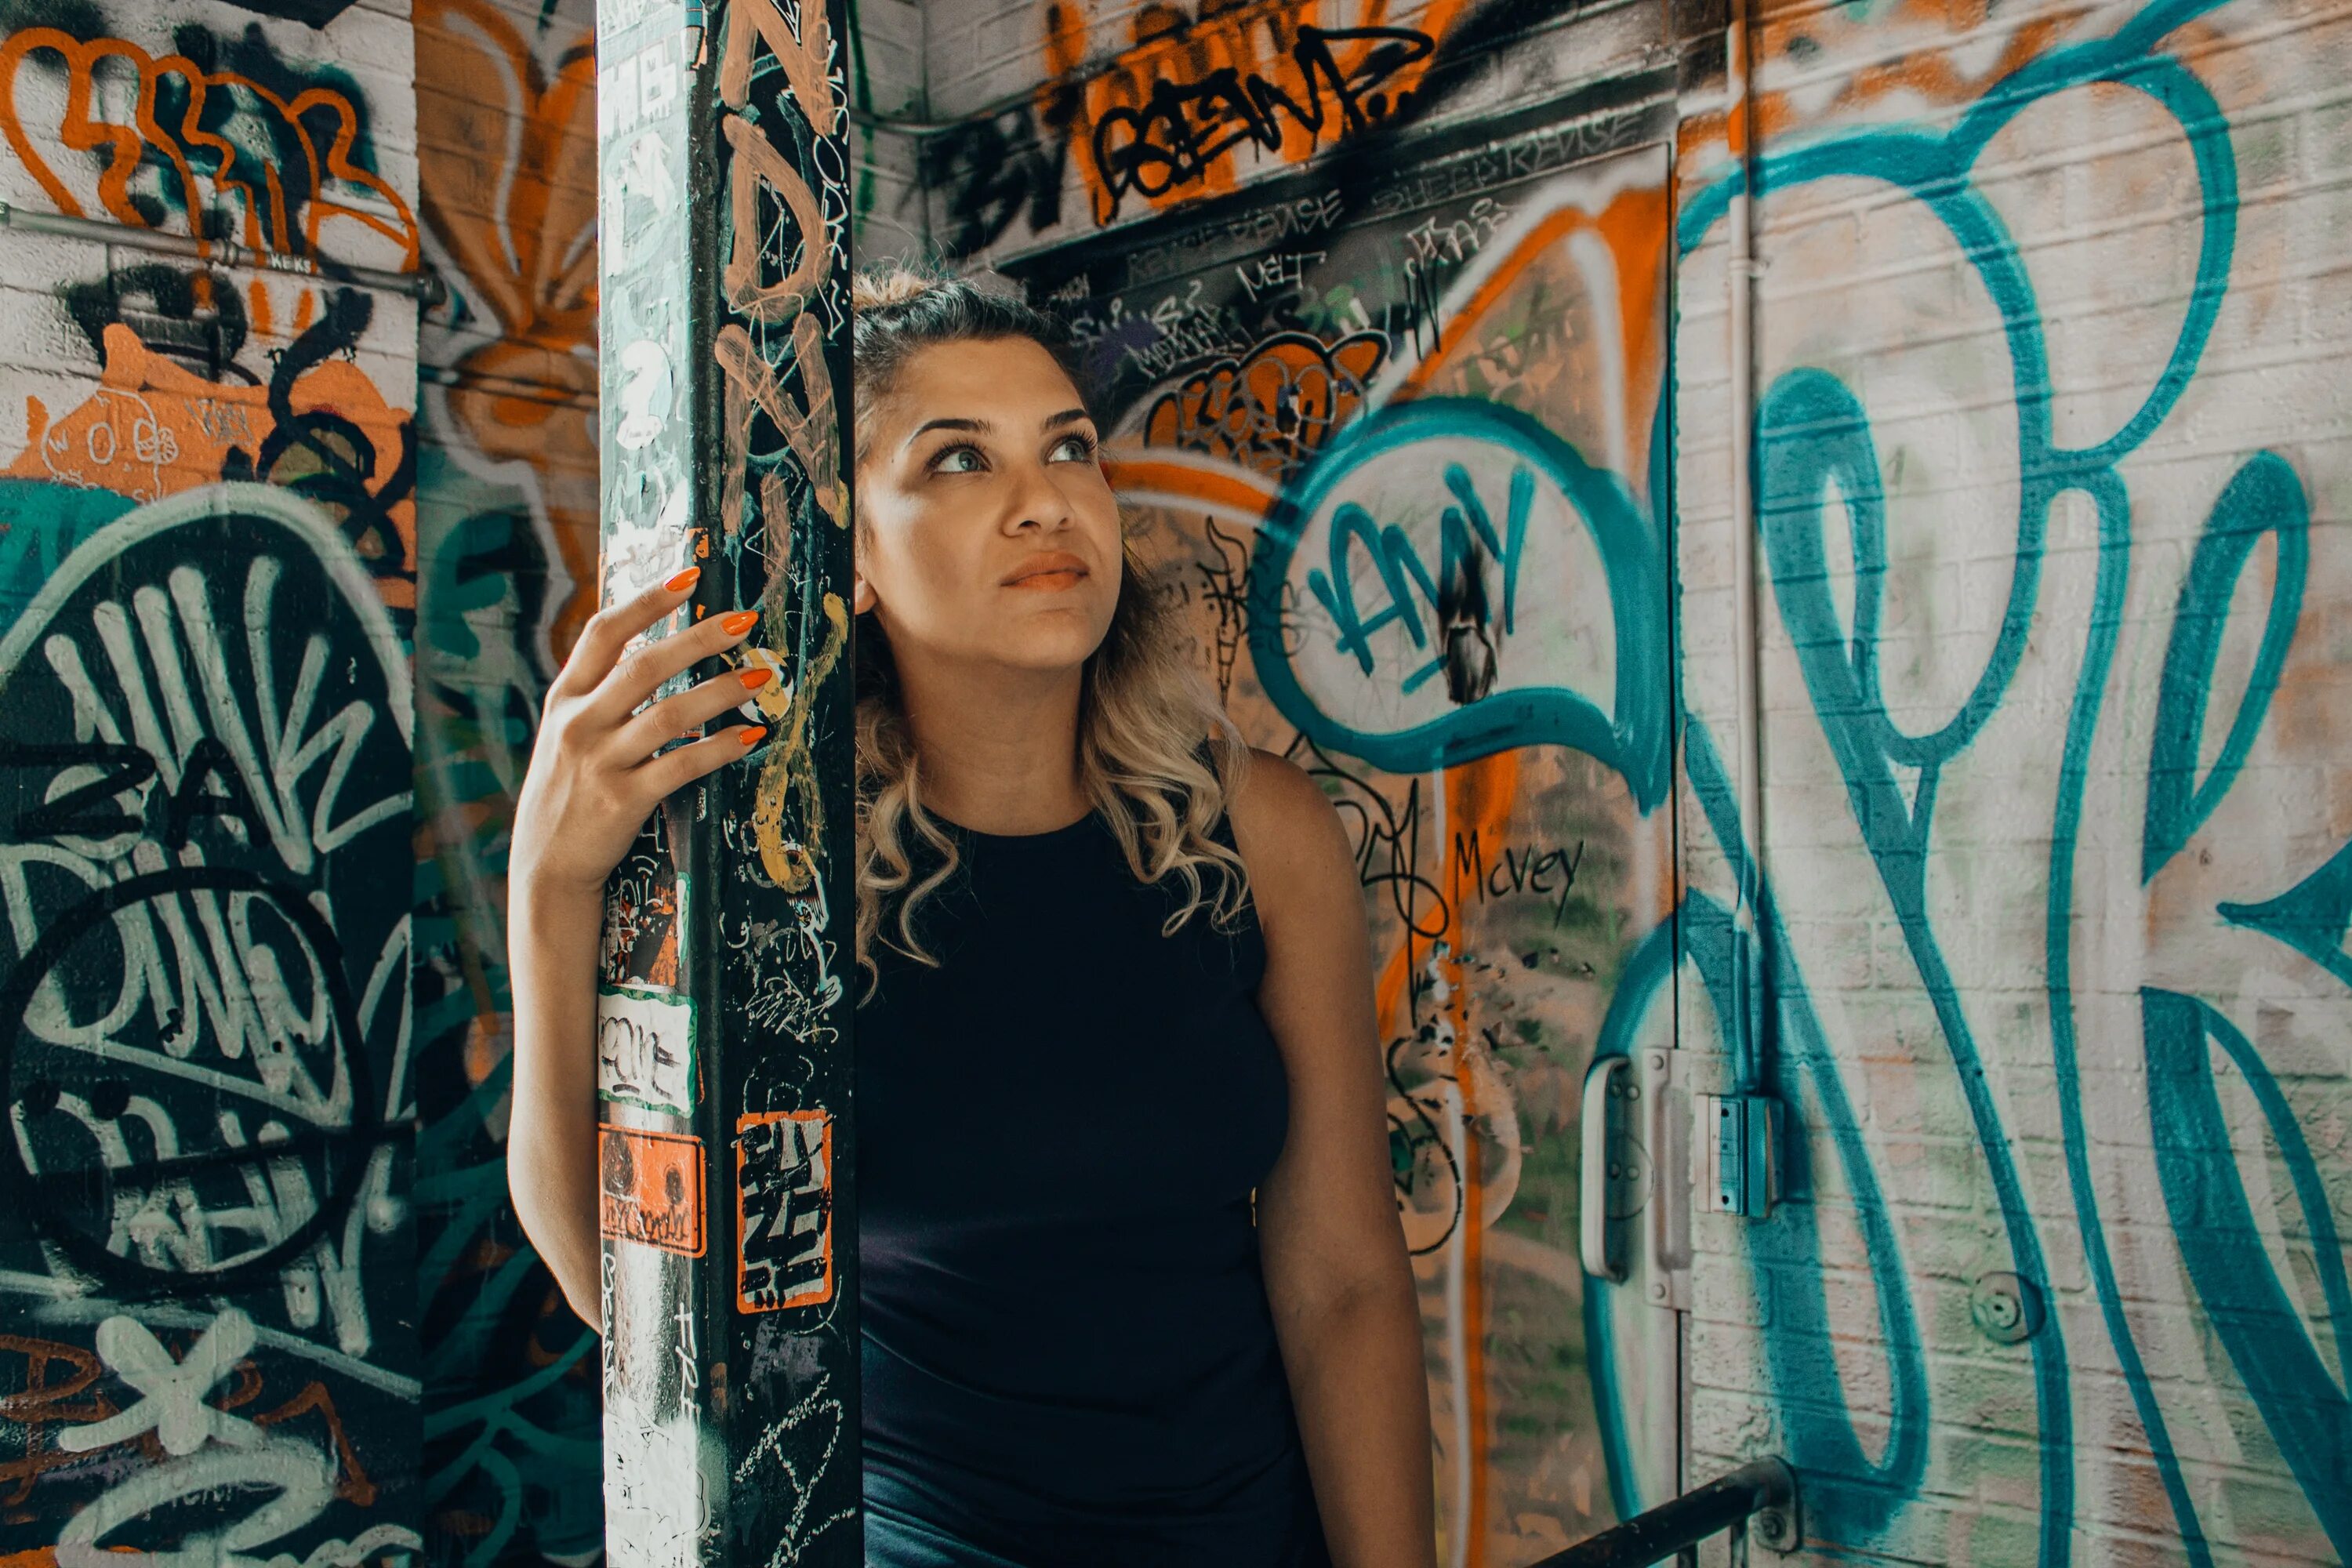 Граффити девушка. Девушка на фоне граффити. Фотосессия у стены с граффити. Фотосъемка в стиле стрит арт. Лица на стенах и полу